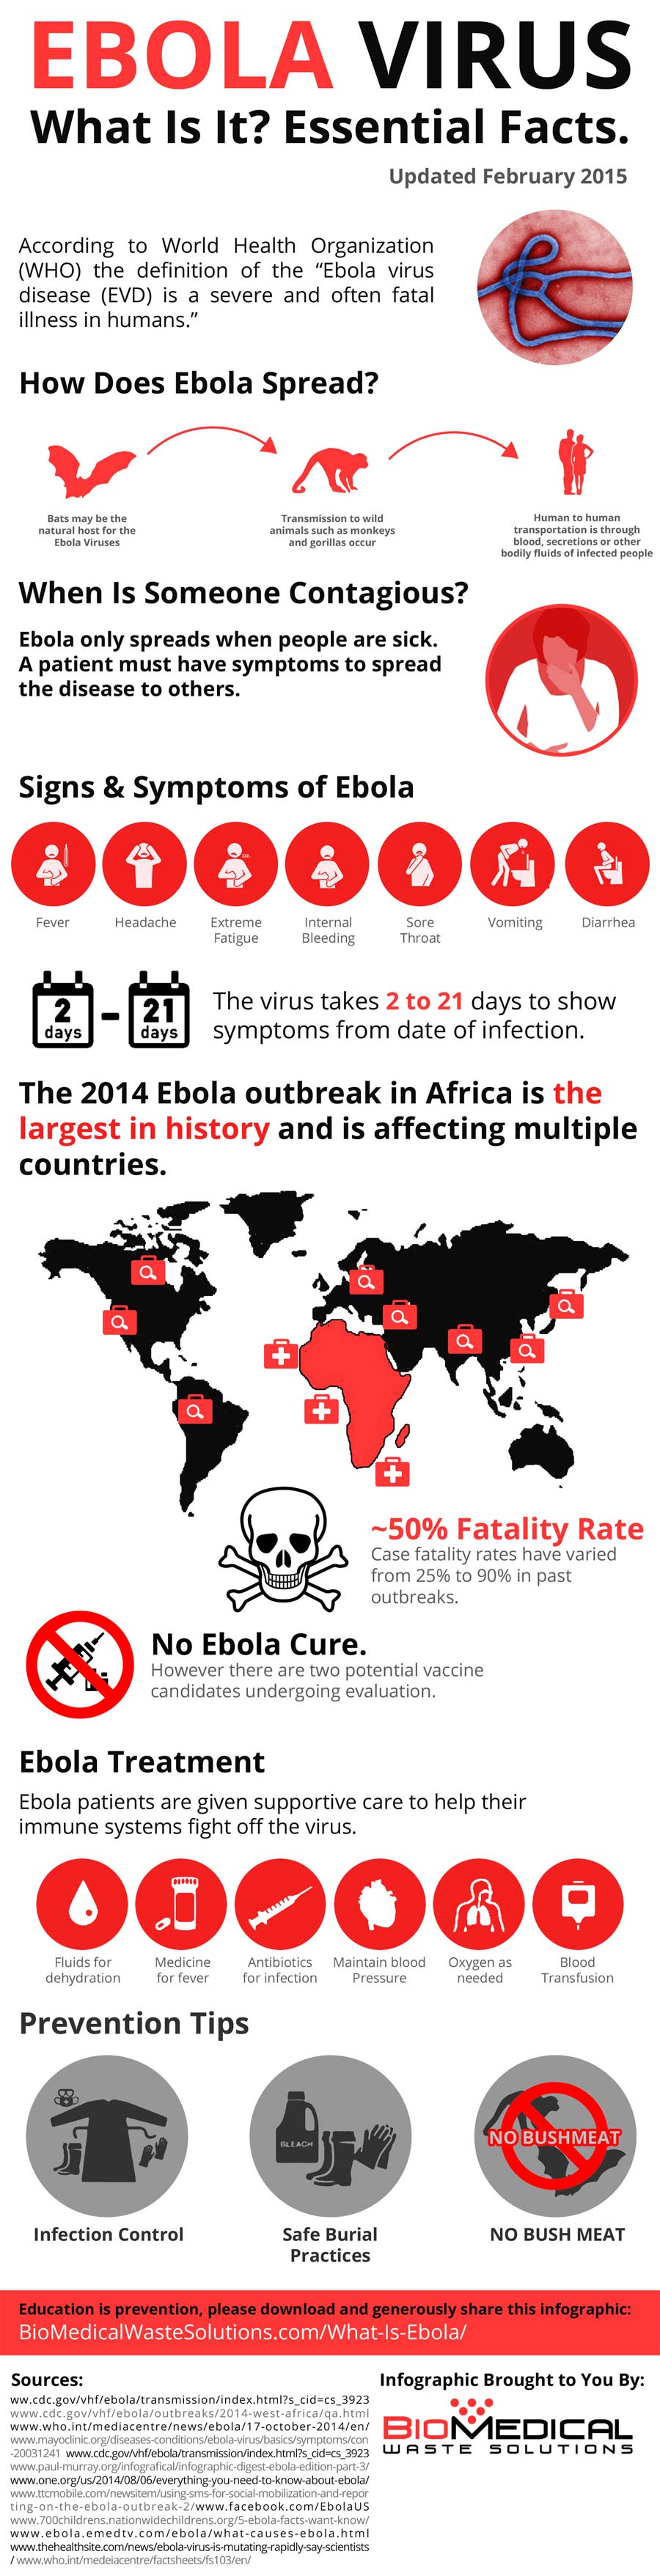 Ebola_virus_infographic_2014_image_small